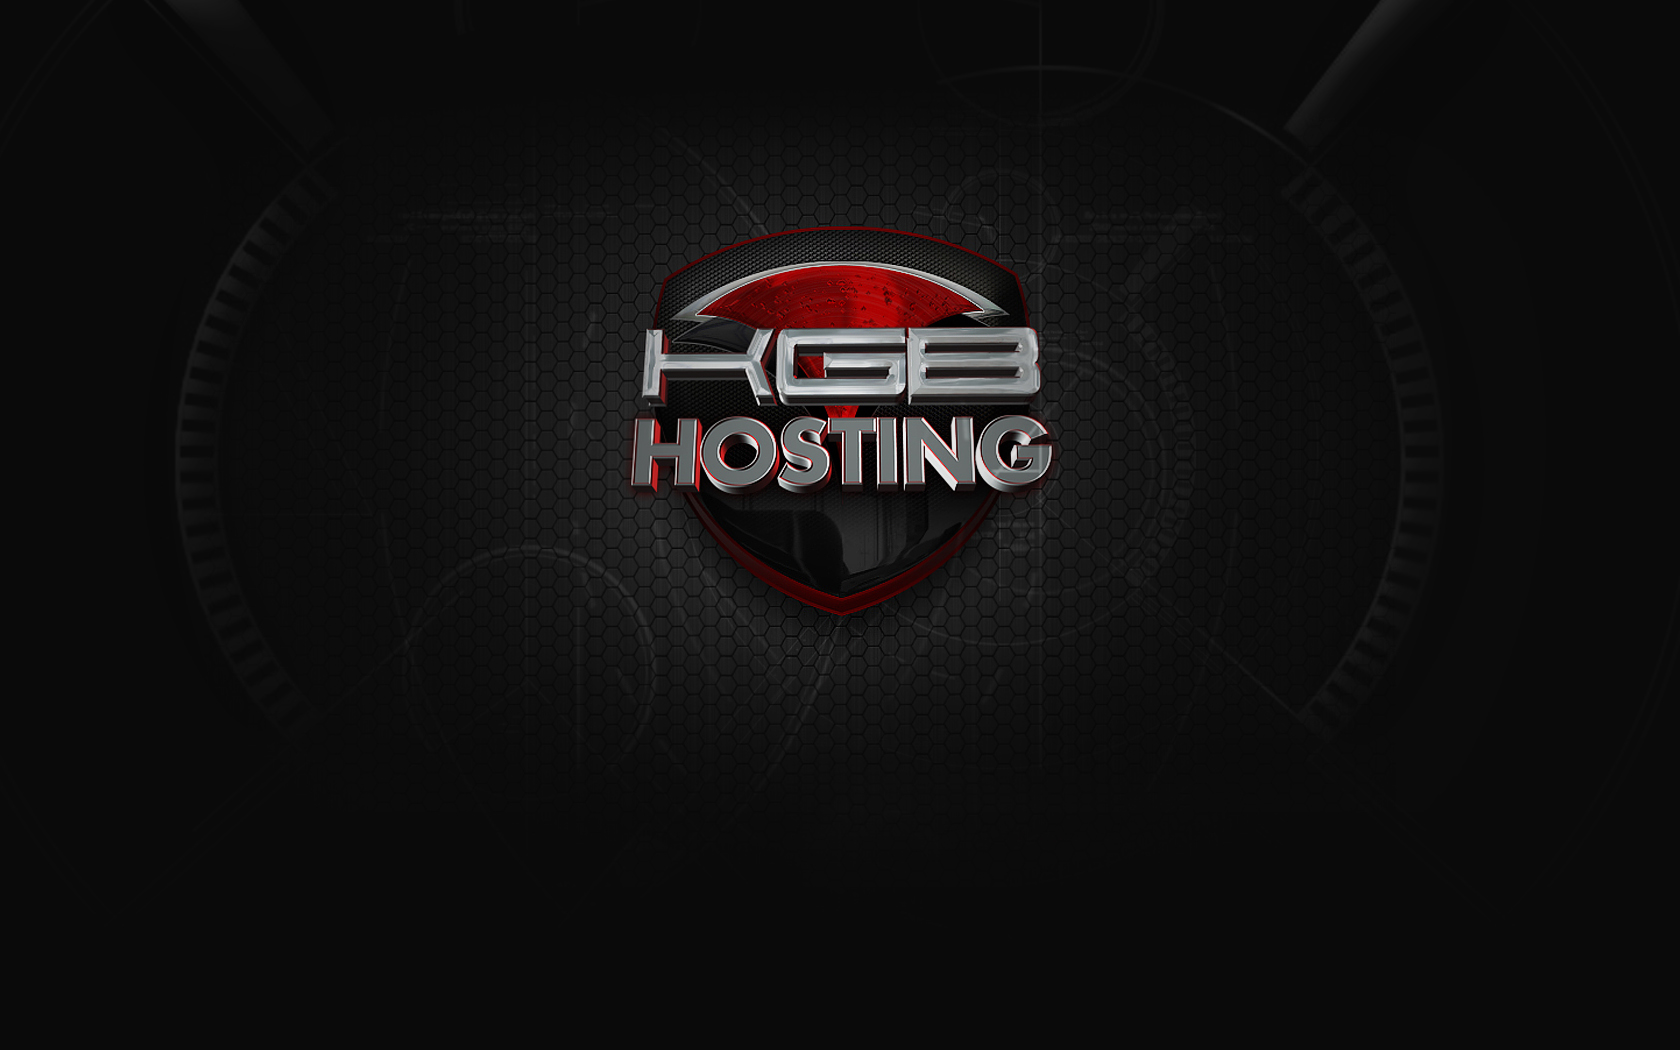 Kgb Hosting